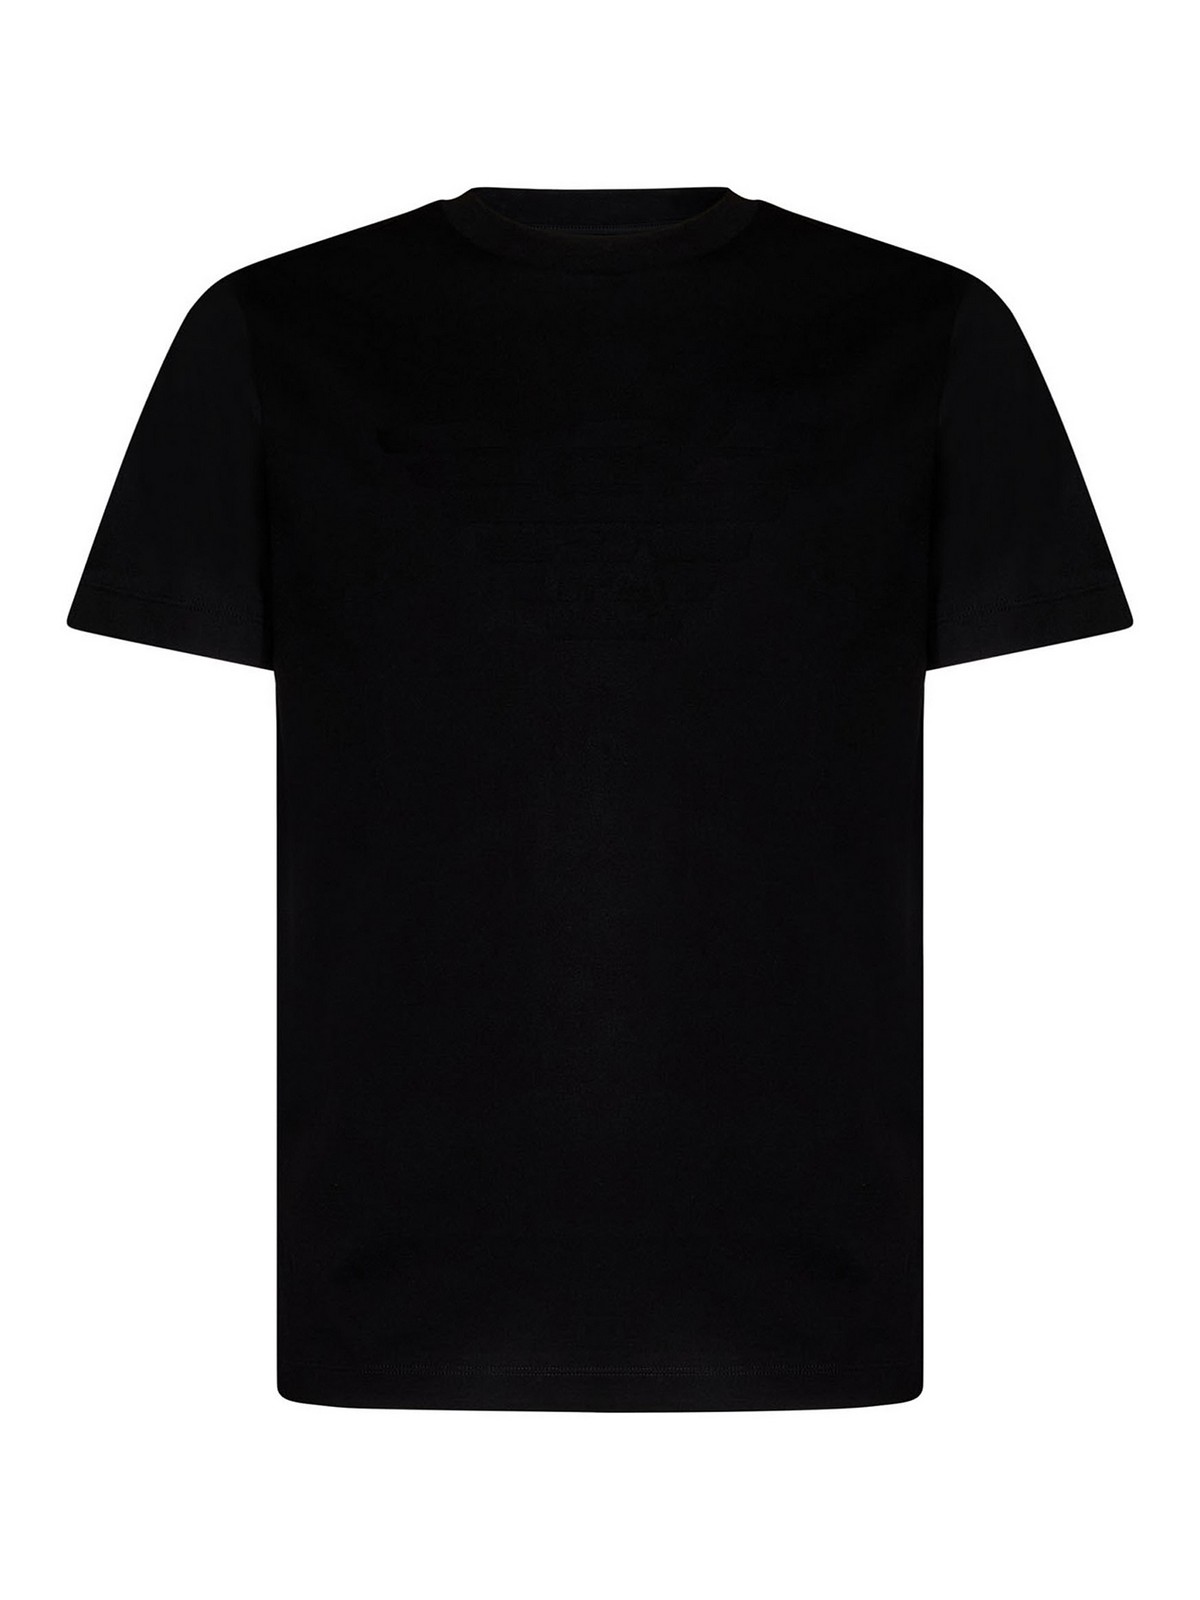 Emporio Armani Black Cotton Jersey T-shirt